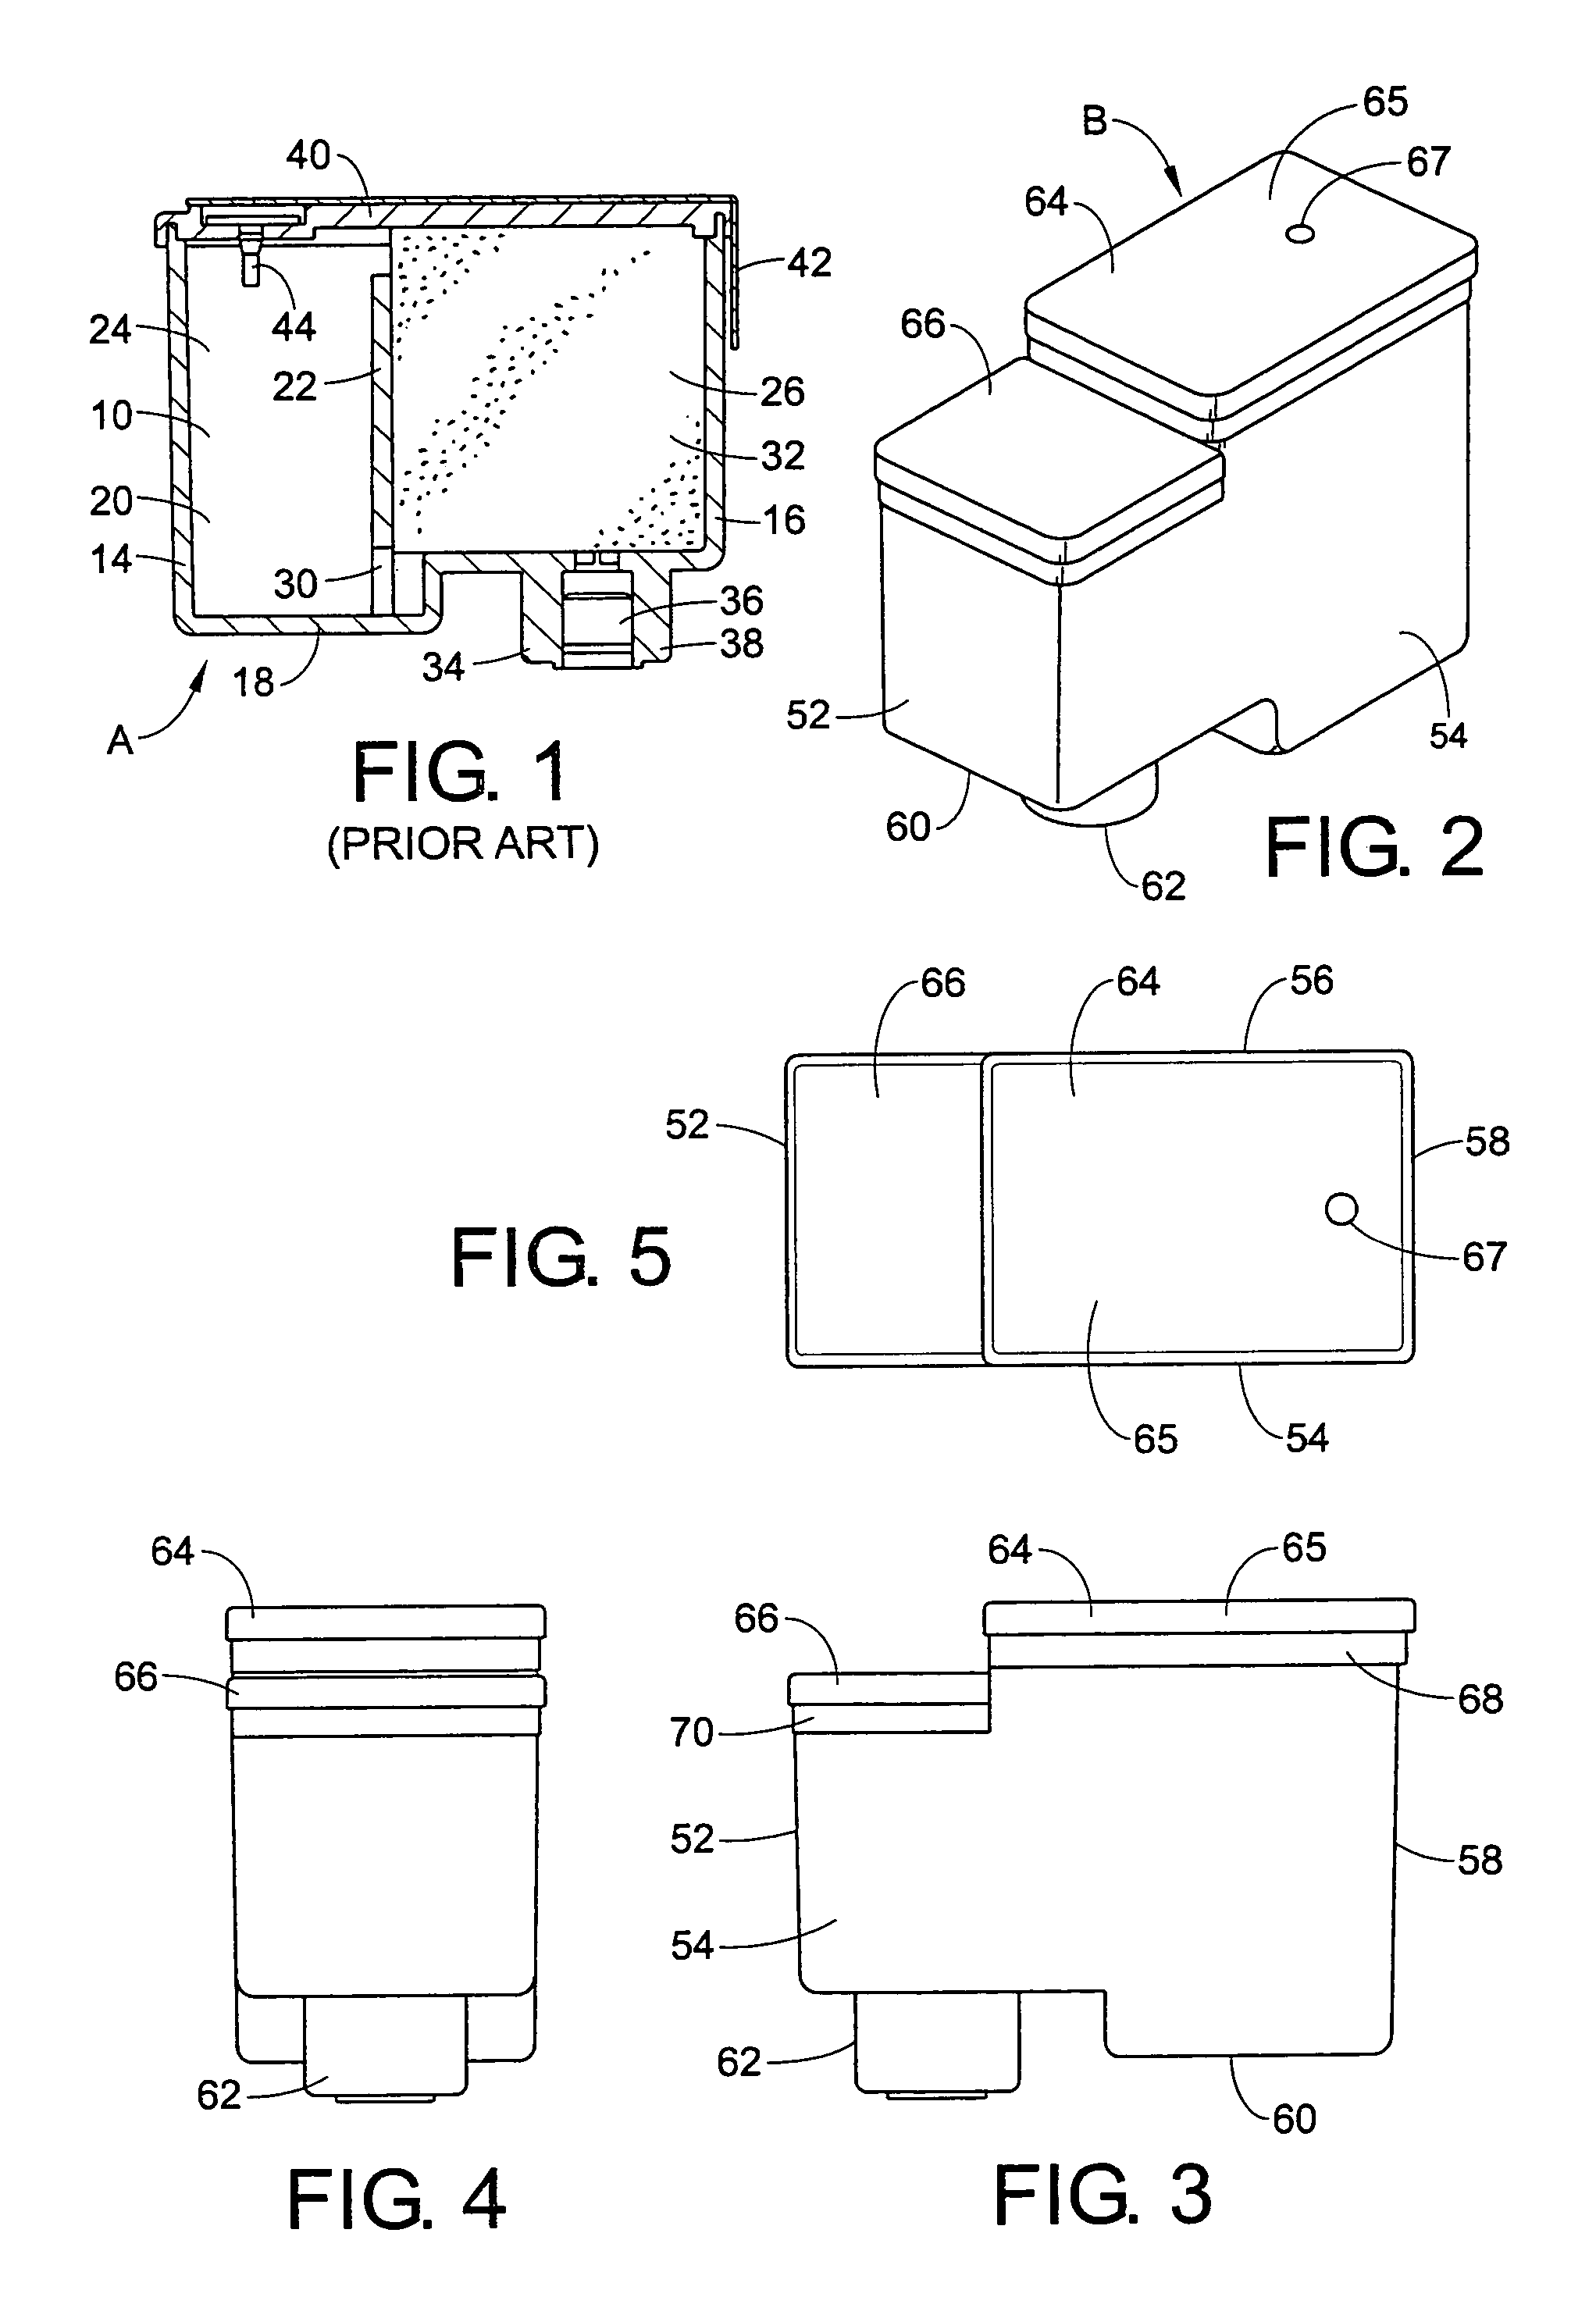 Ink-jet cartridge removal device